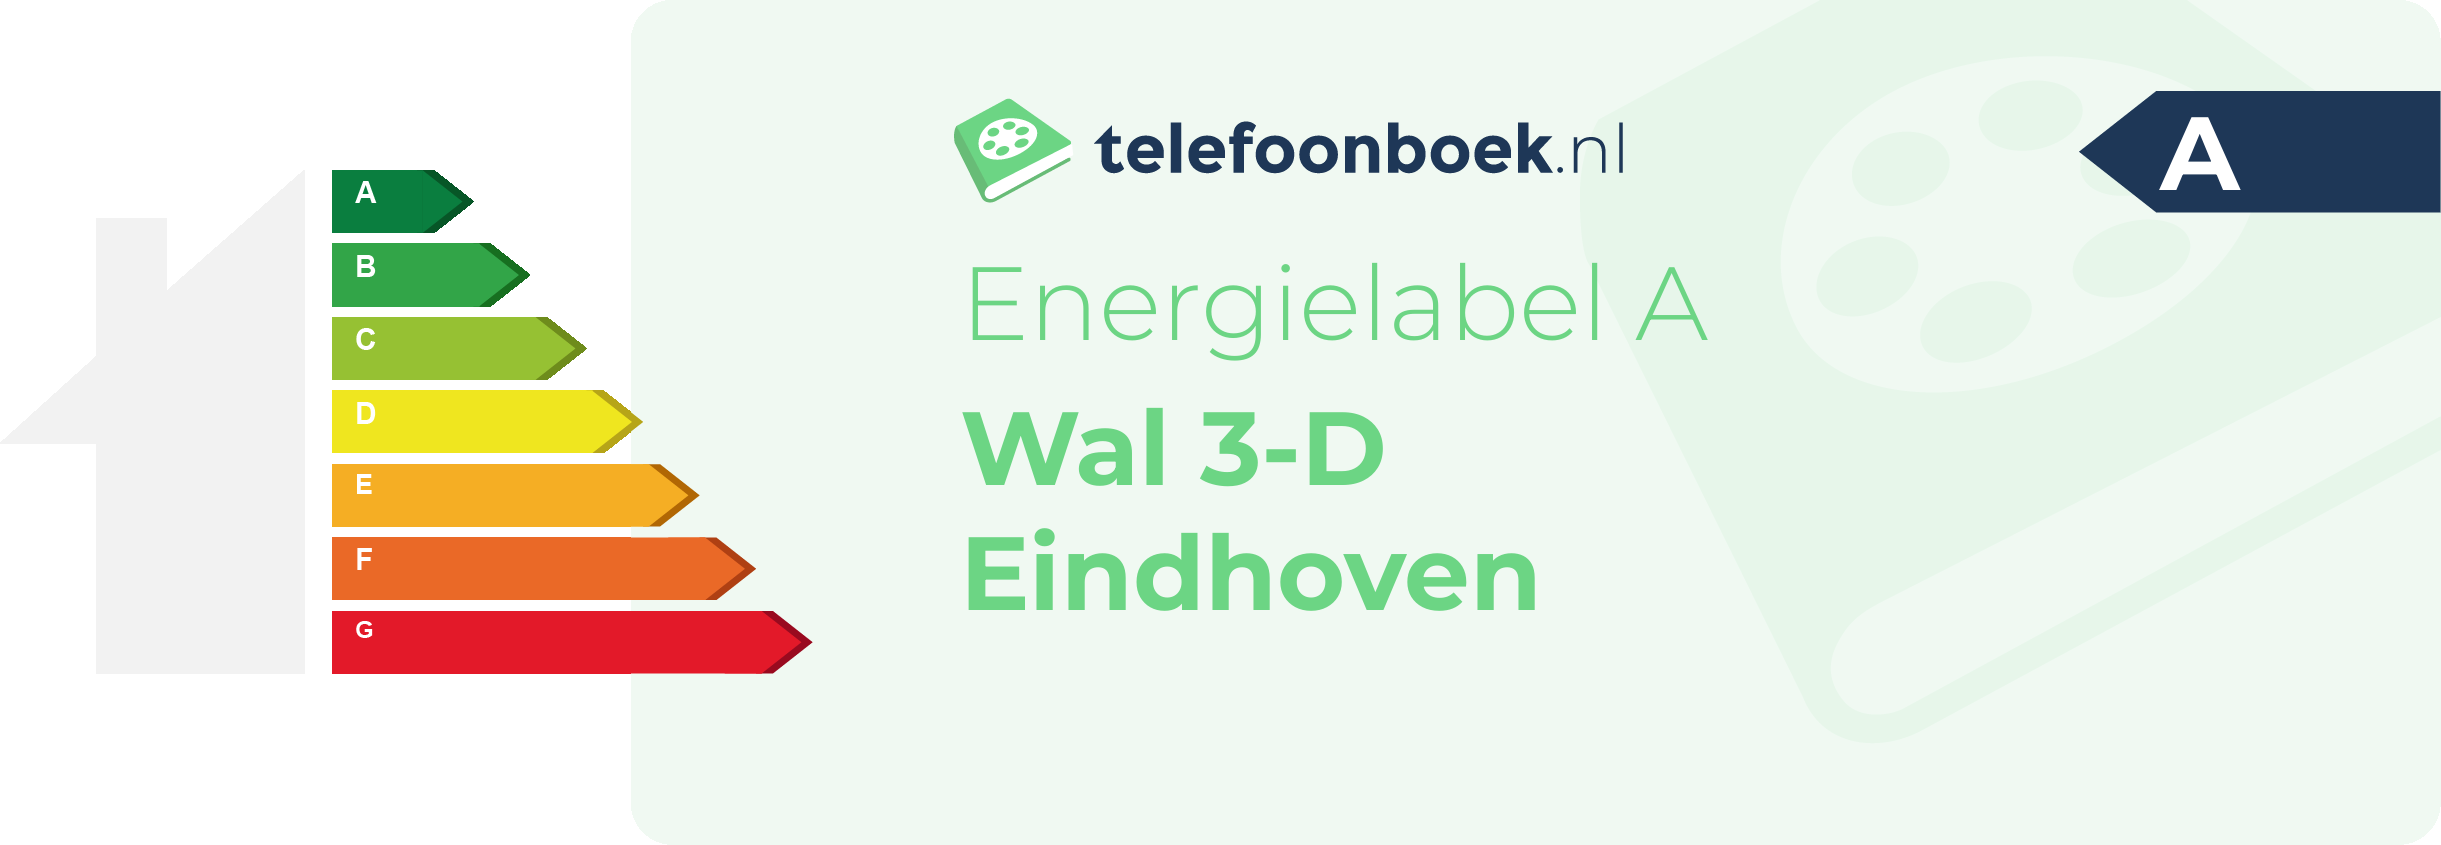 Energielabel Wal 3-D Eindhoven